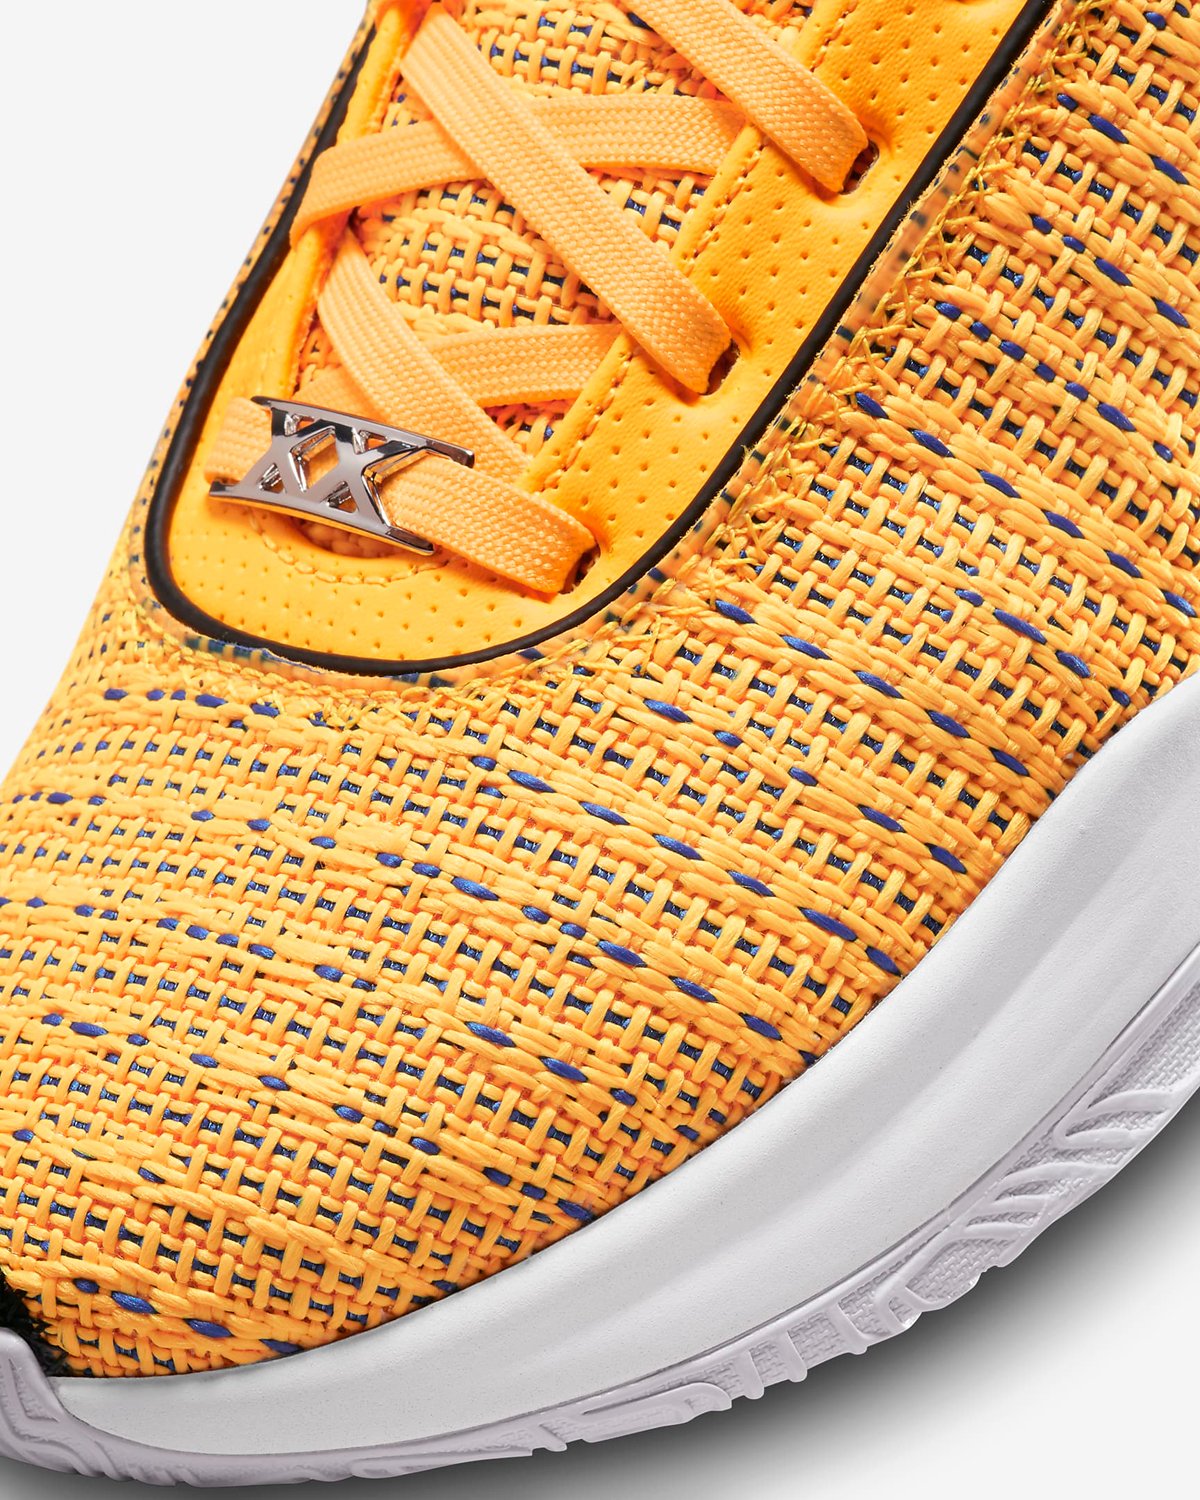 Nike-LeBron-20-Laser-Orange-Release-Date-7